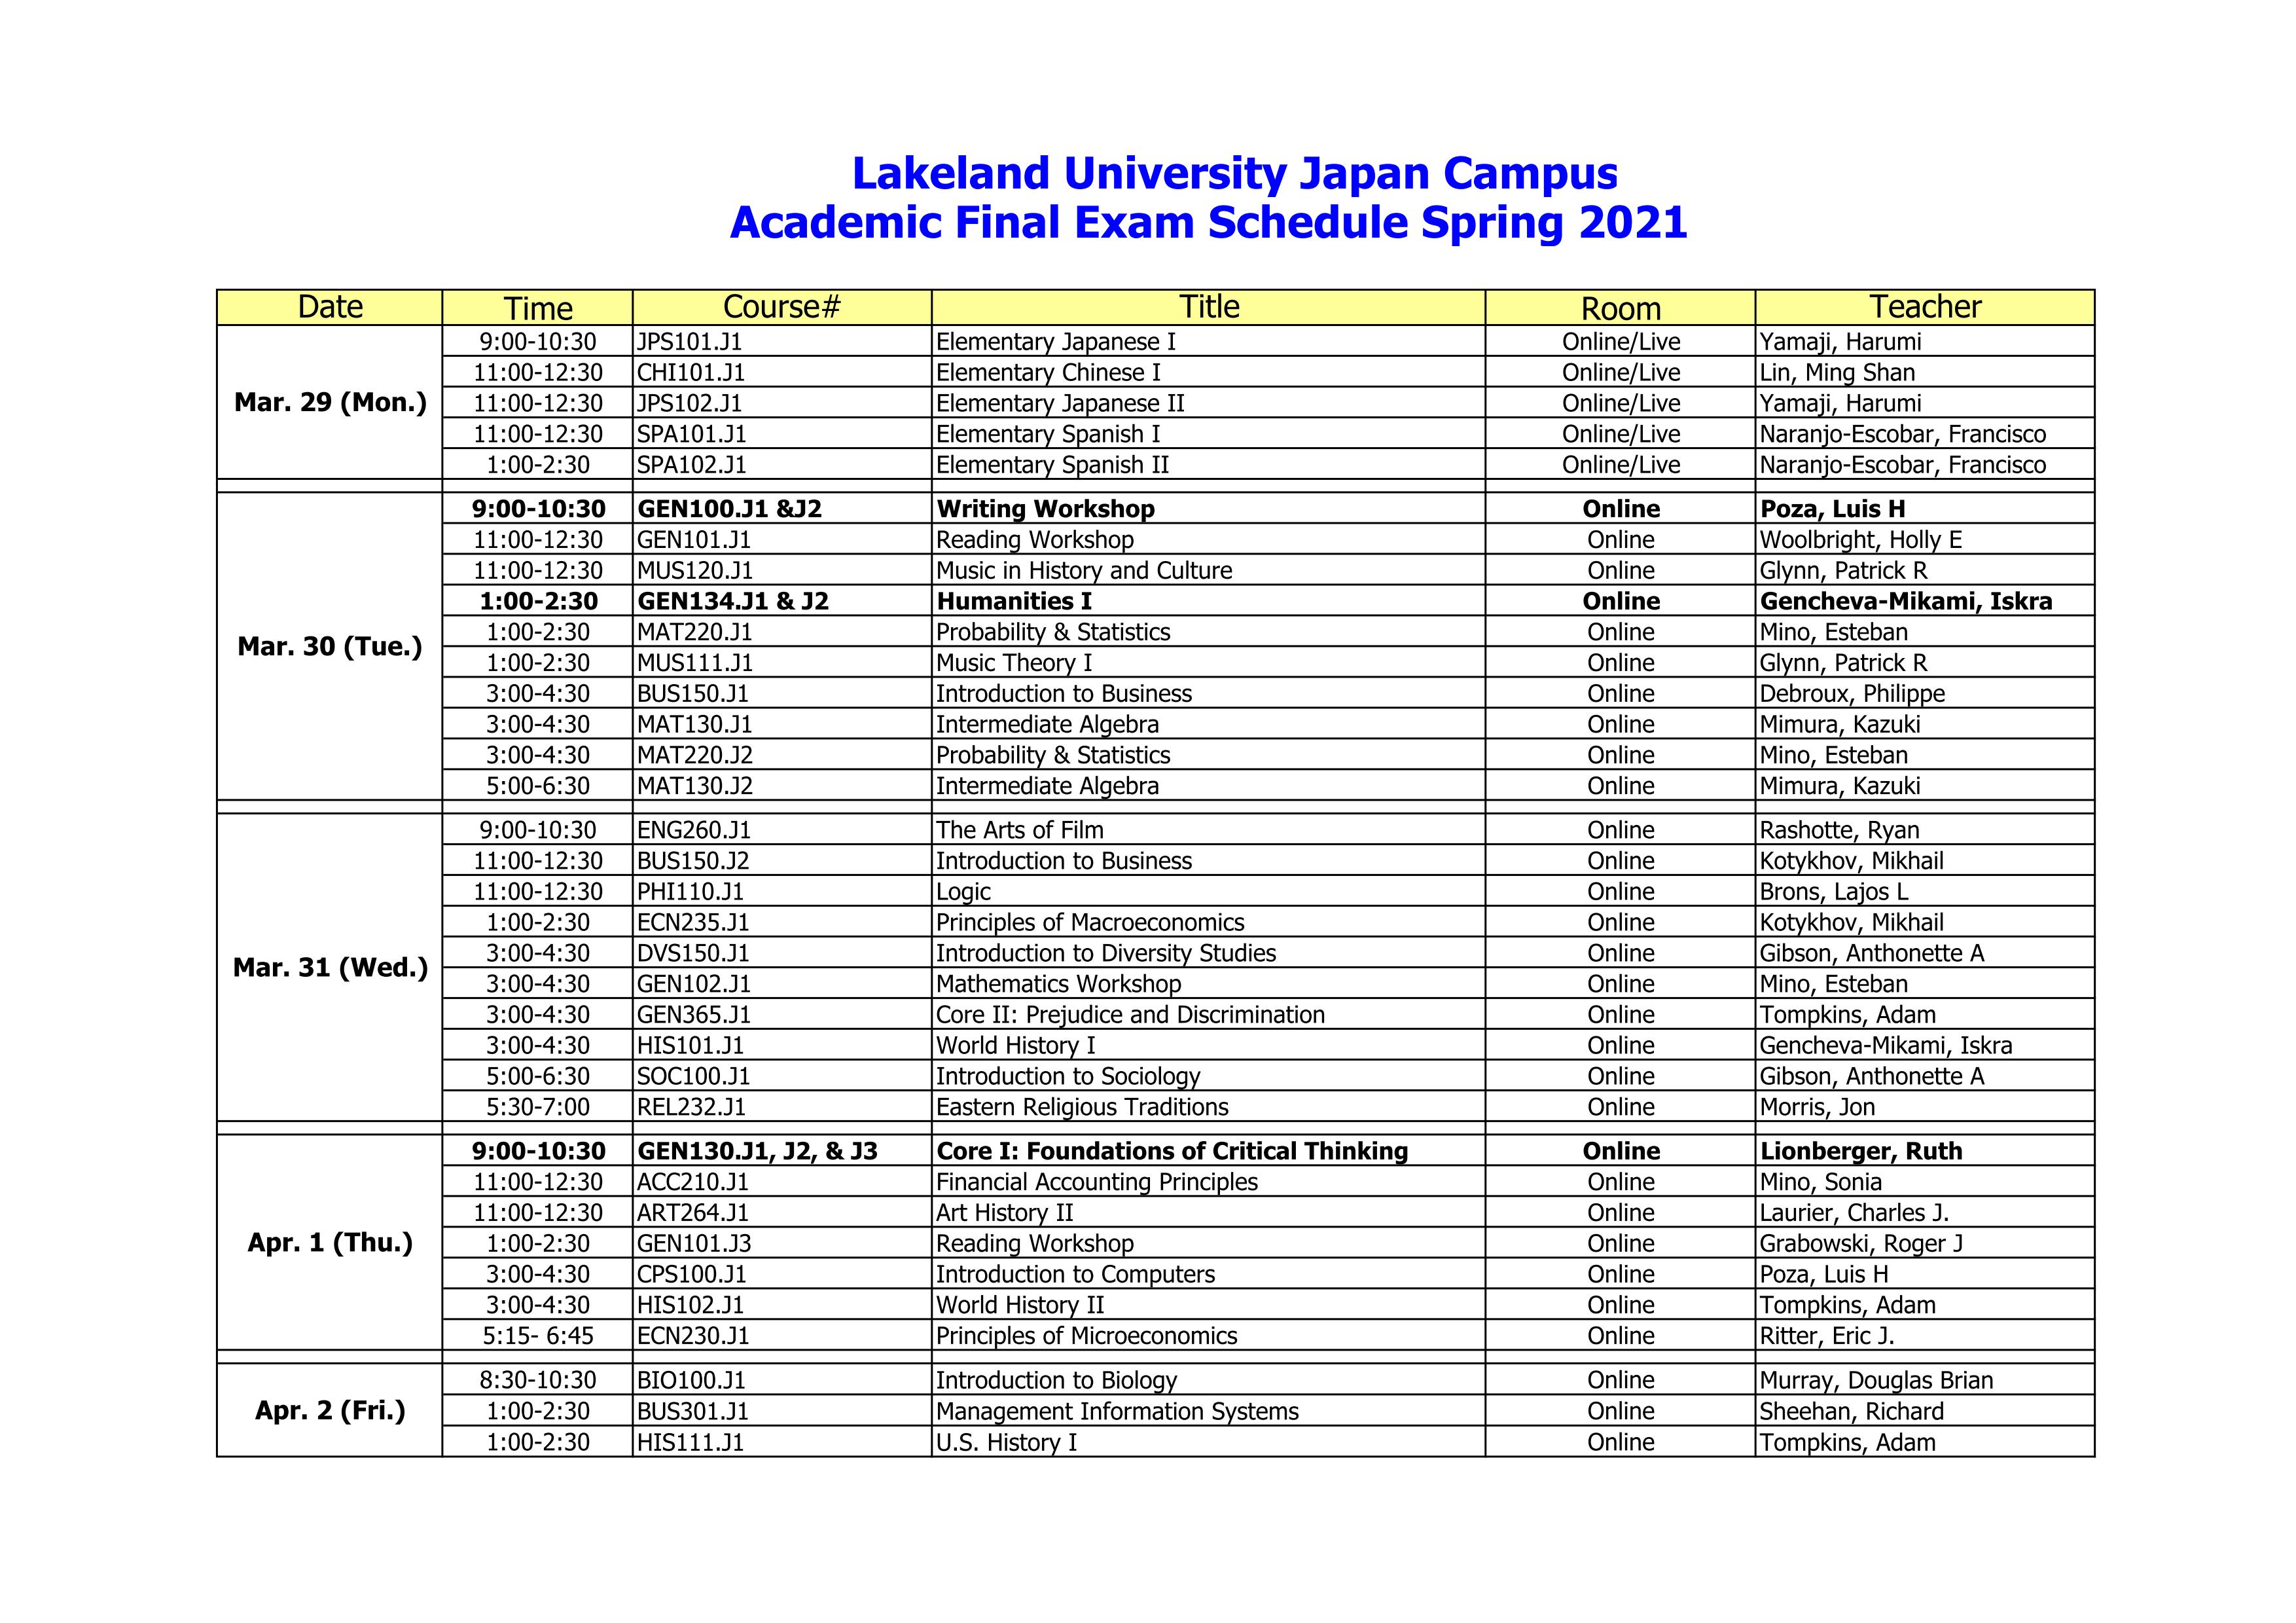 Spring 2022 Ku Academic Calendar Spring 2021 Final Exam Schedule - Lakeland University